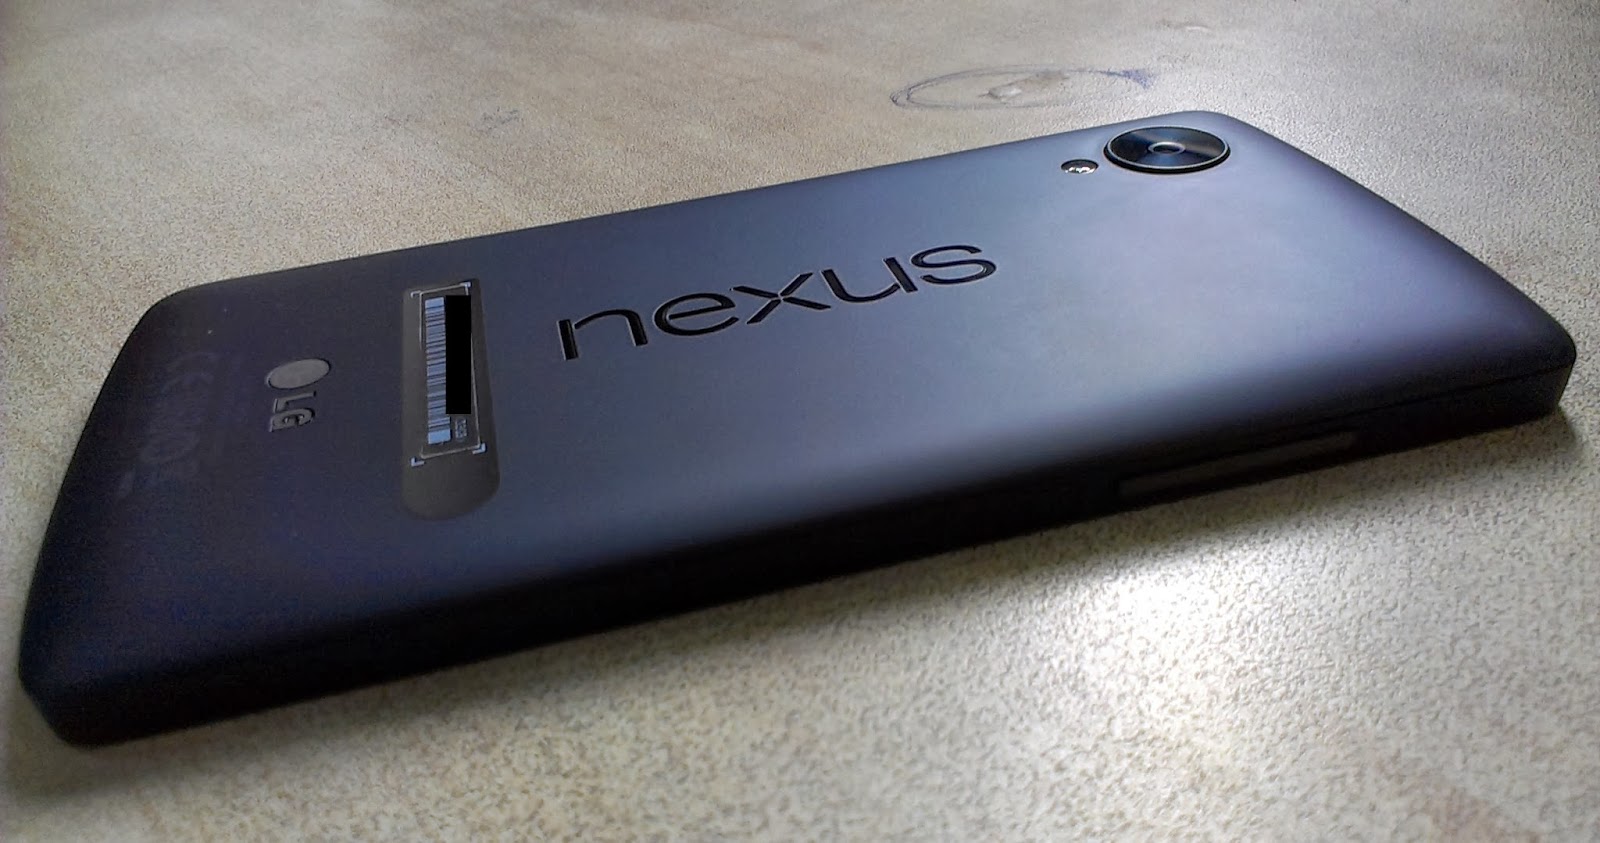 Google+LG+Nexus+5+Android+KitKat+Review+Handson+Detailed+Benchmark++%252810%2529.jpg